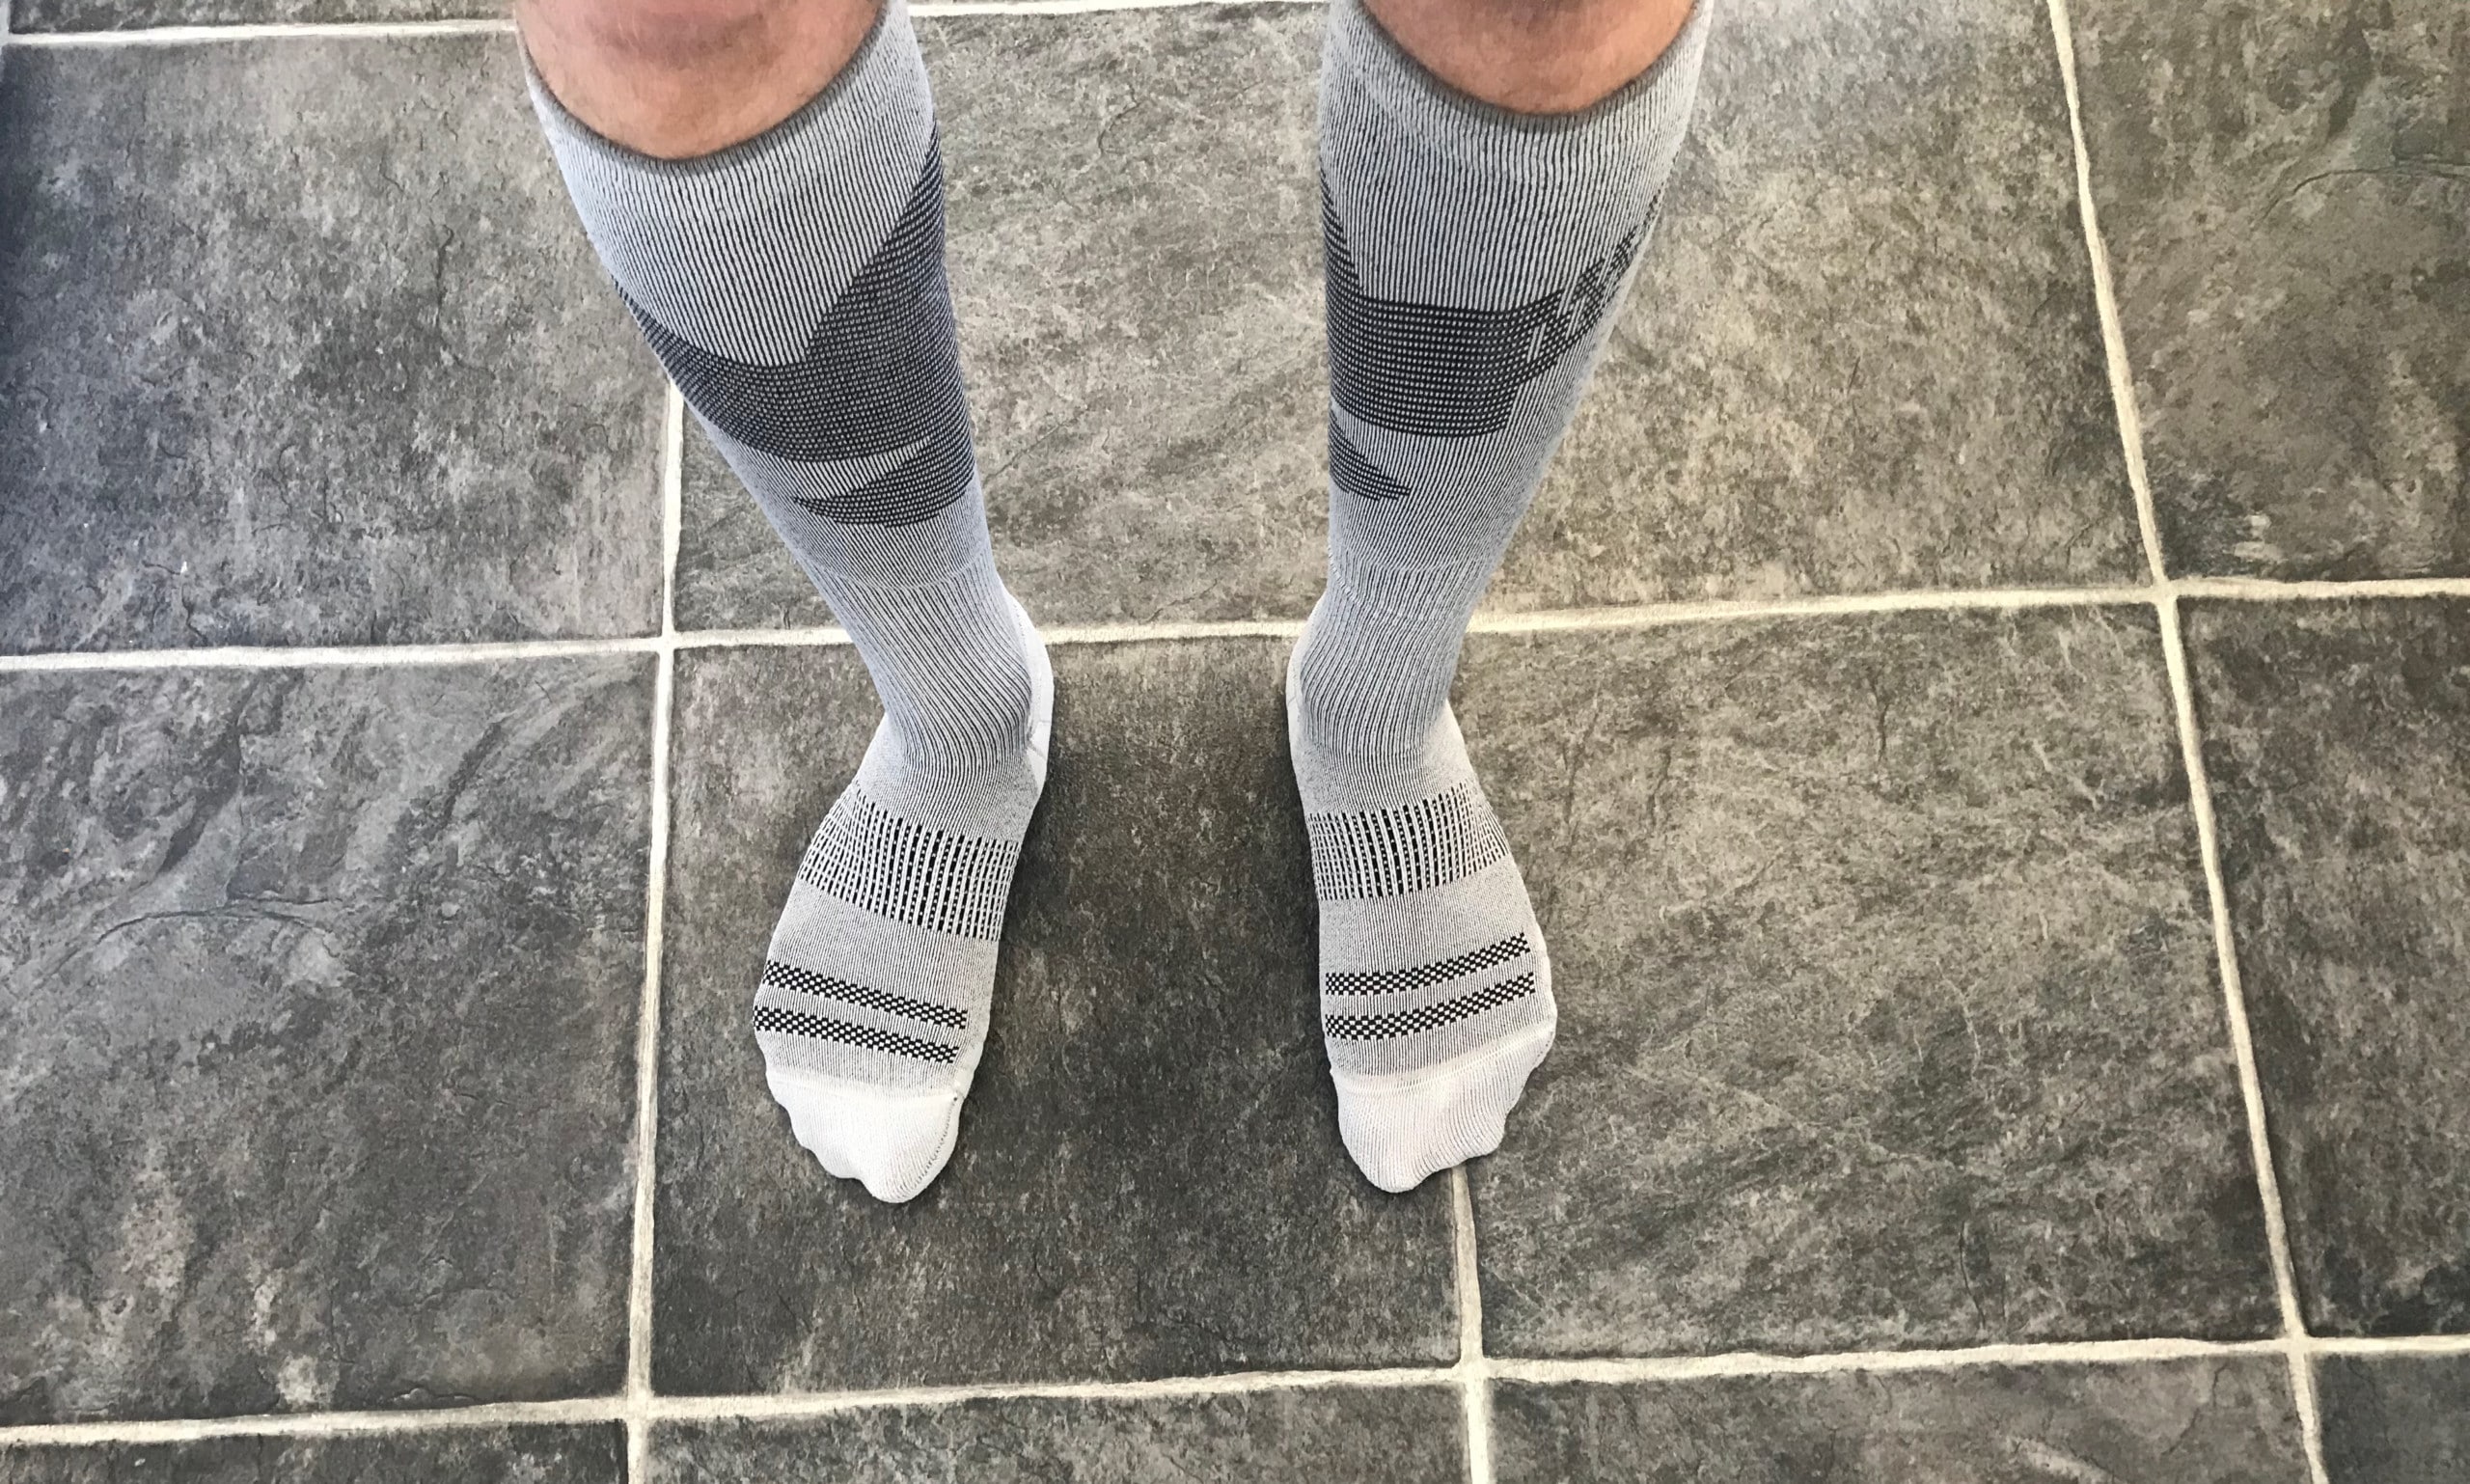 Rockay Vigor compression running socks in Ecowhite